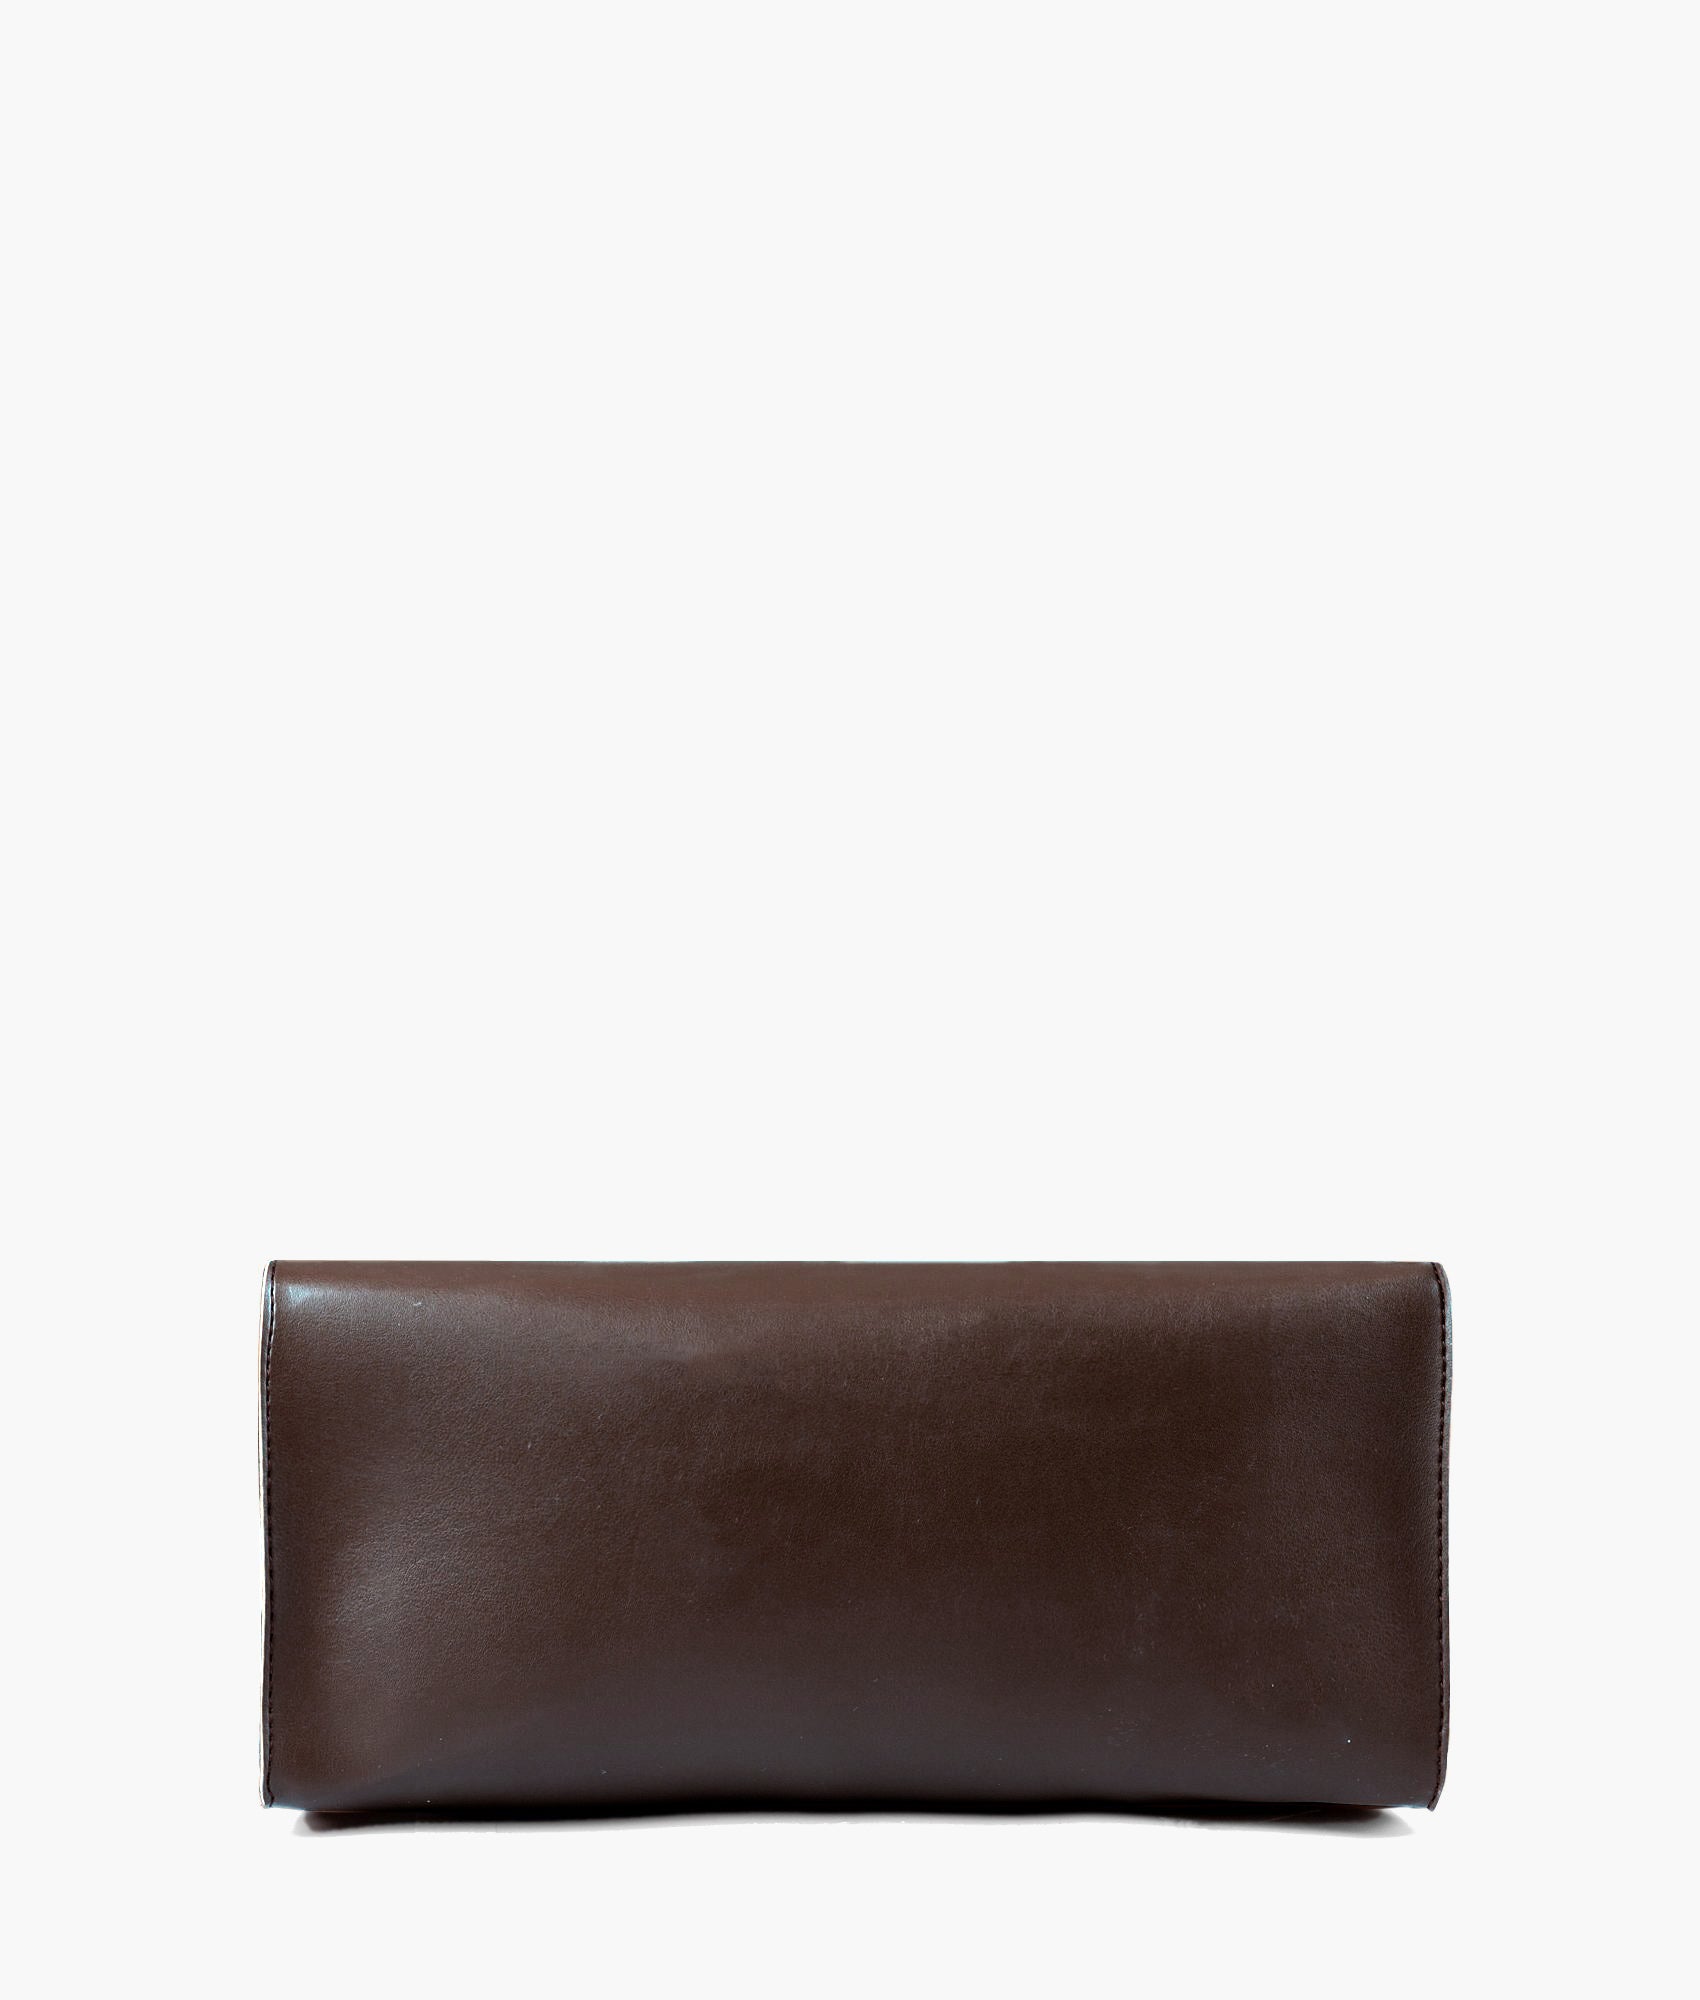 Dark brown multi compartment satchel bag